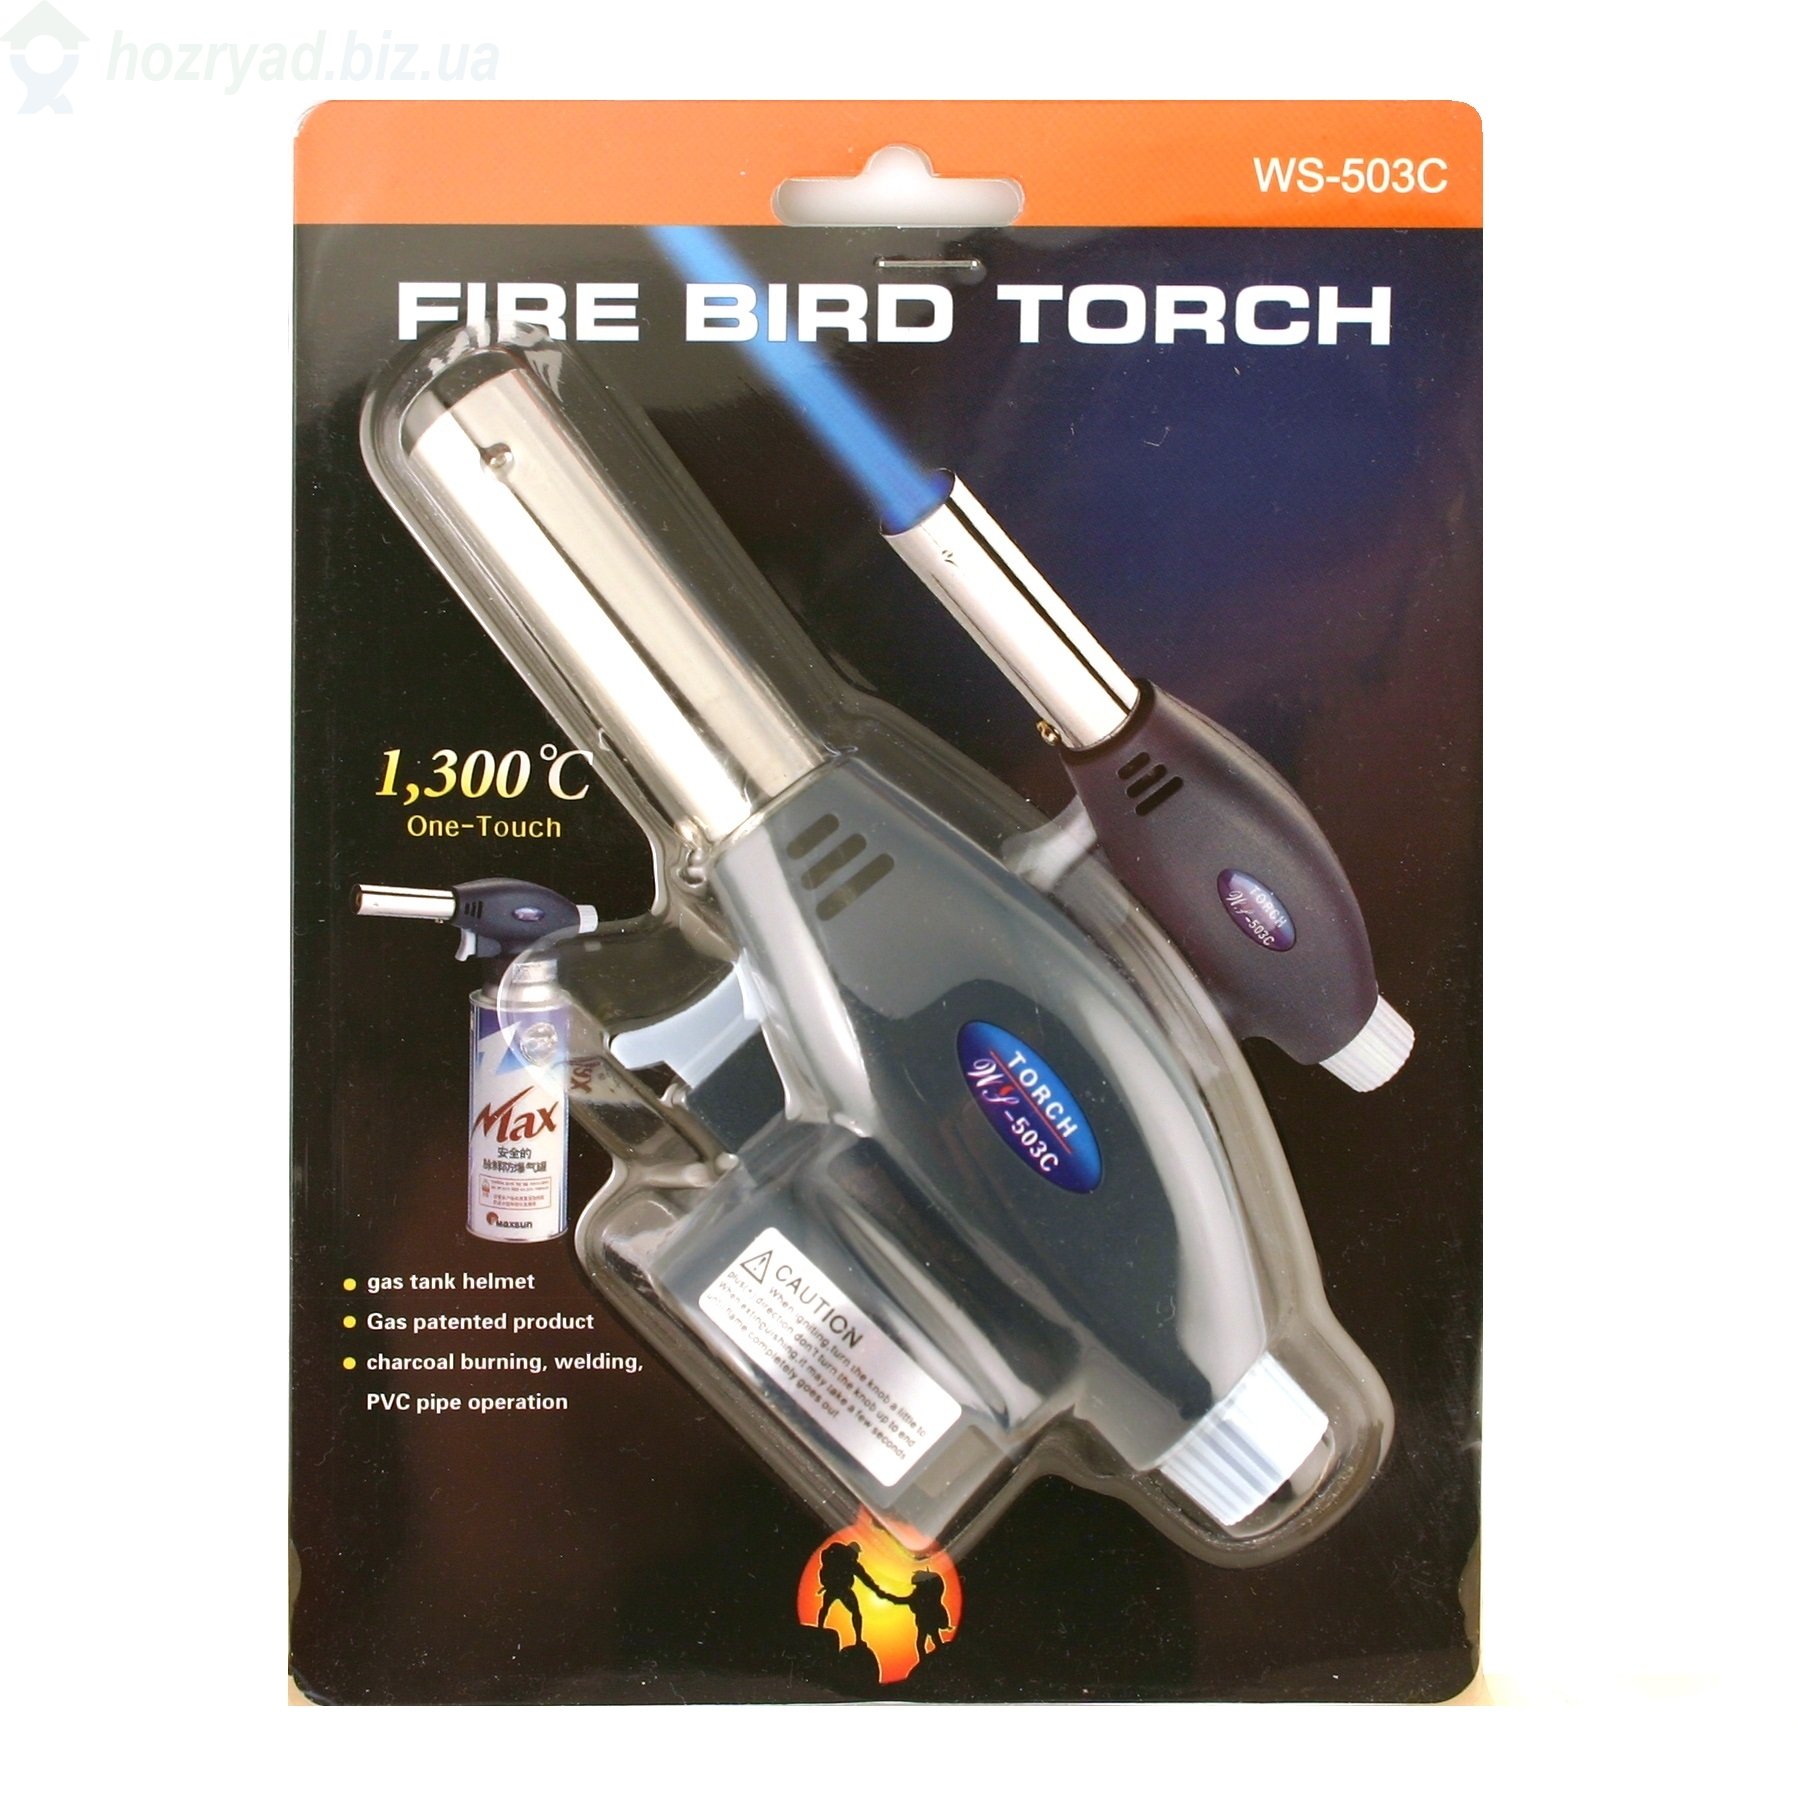   Fire Bird Torch WS-503C 503